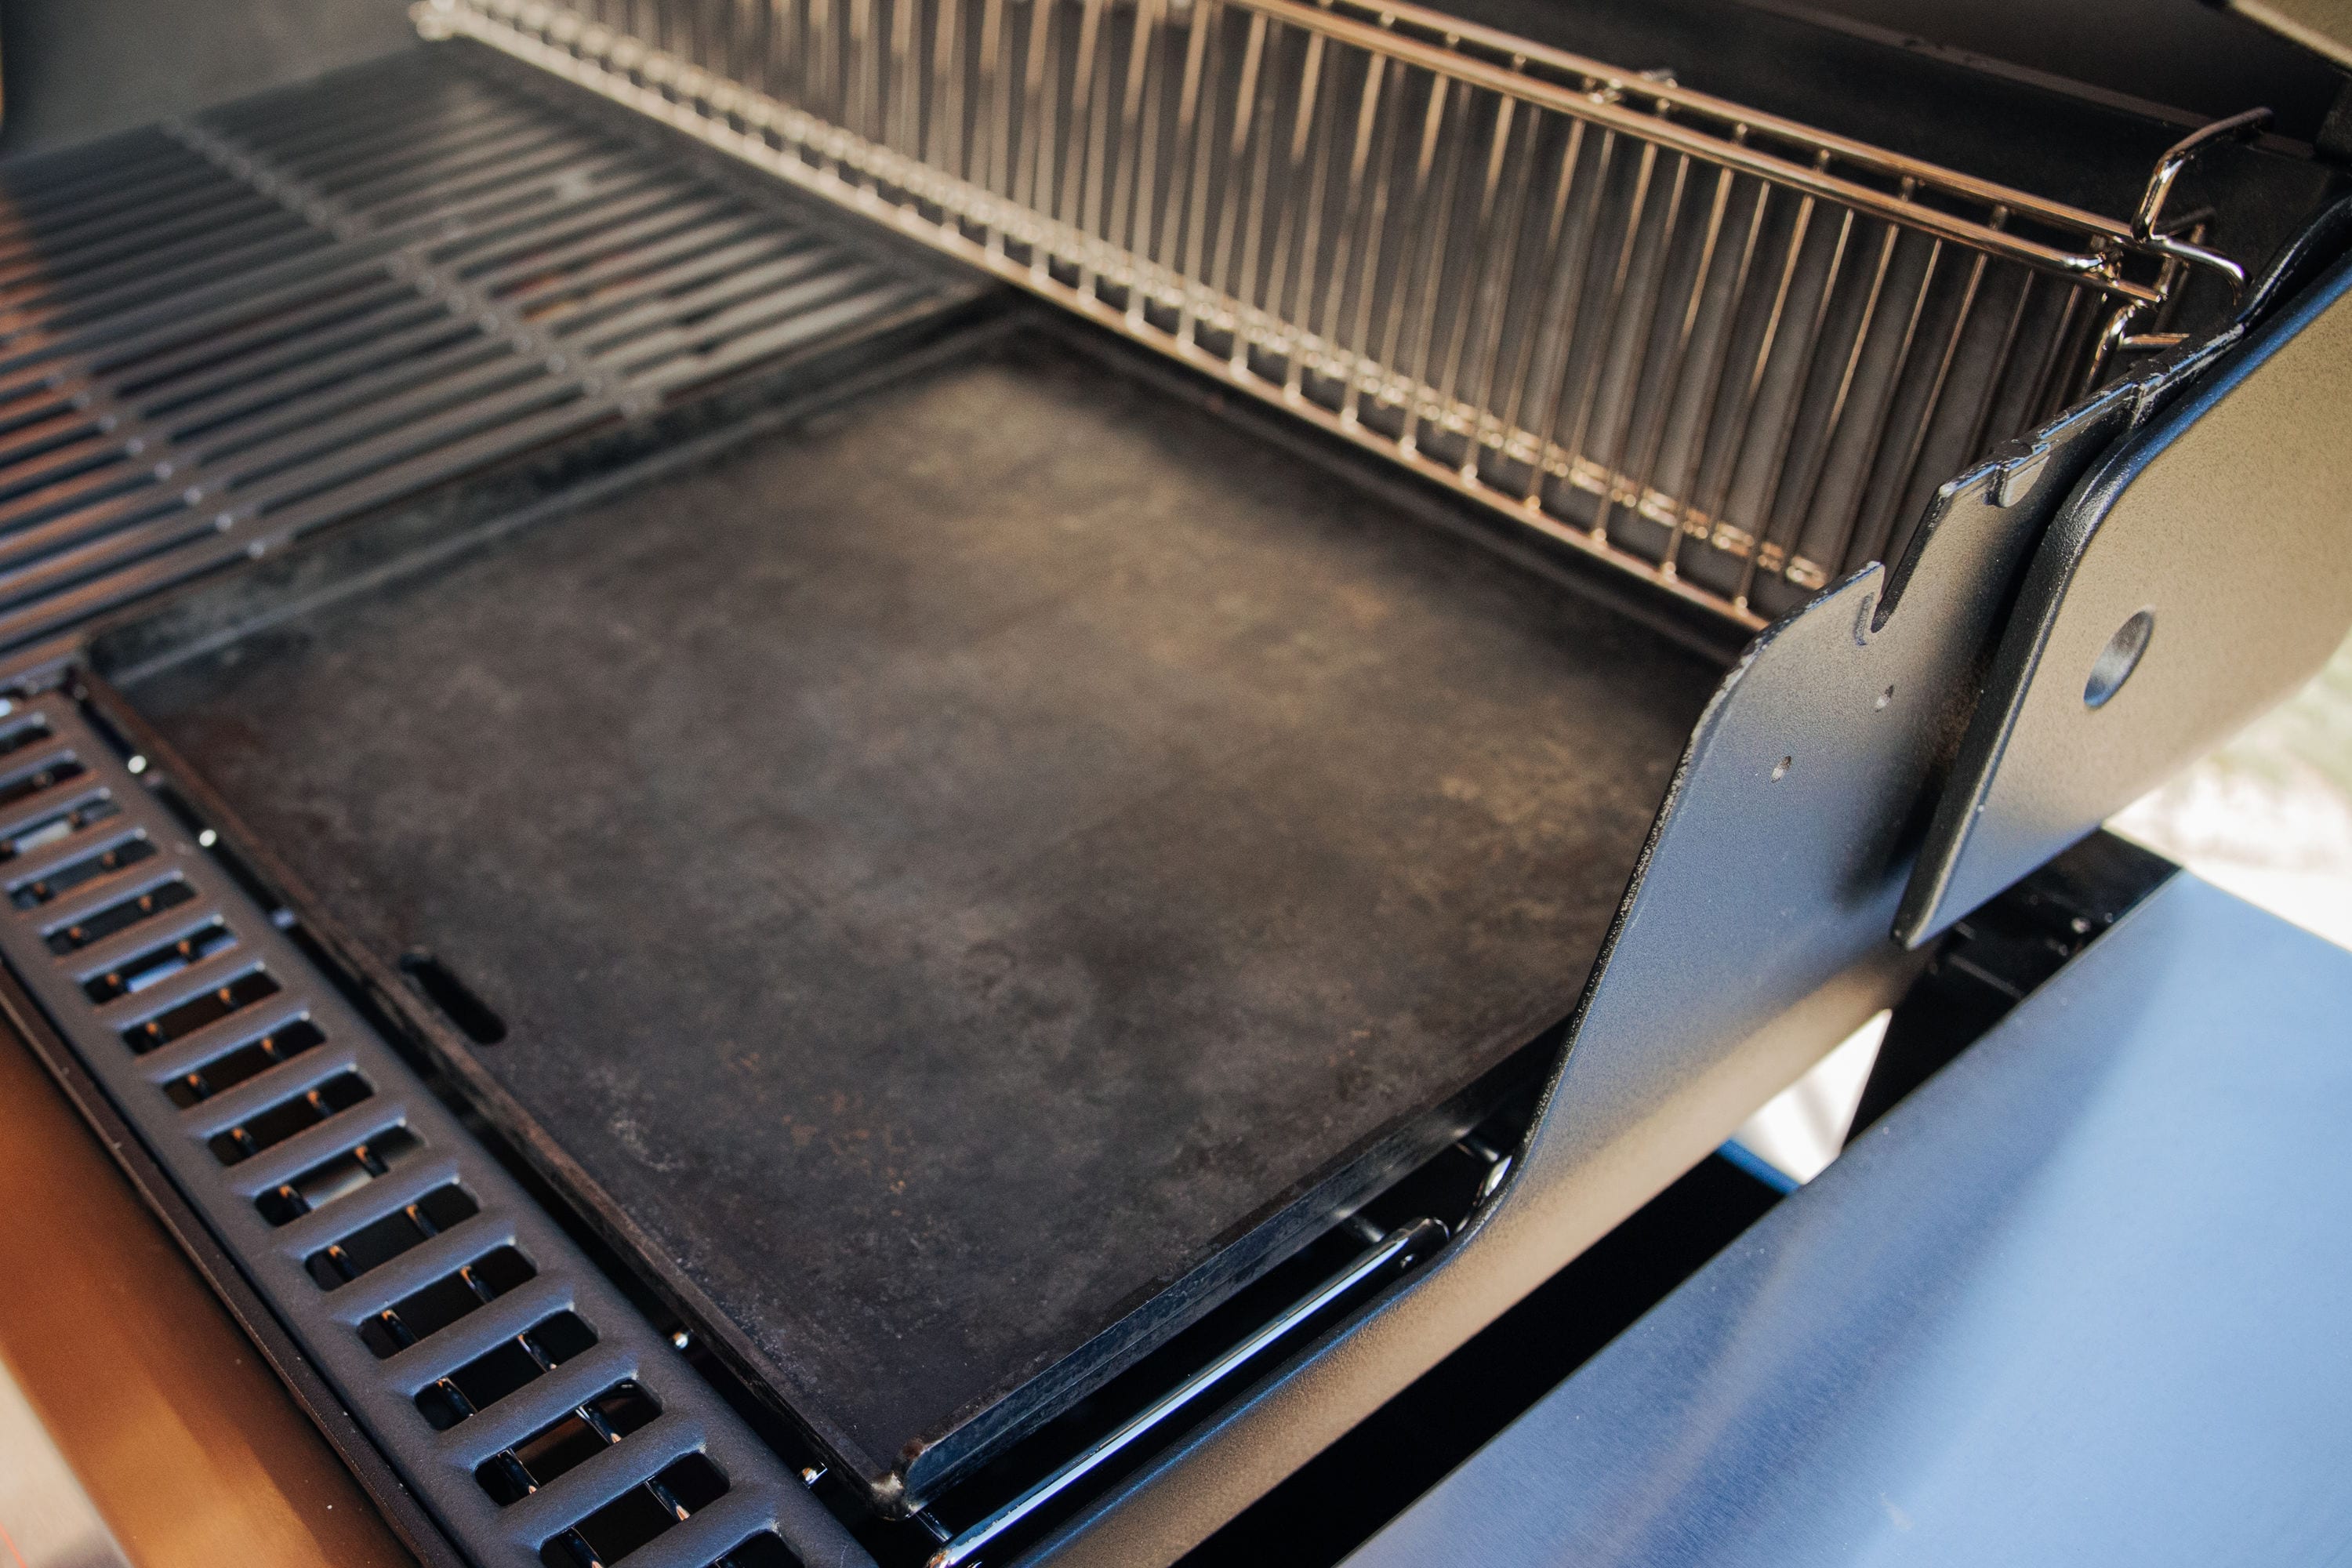 The Carbon Steel Sets Carbon Grilling Set – Cook Ware